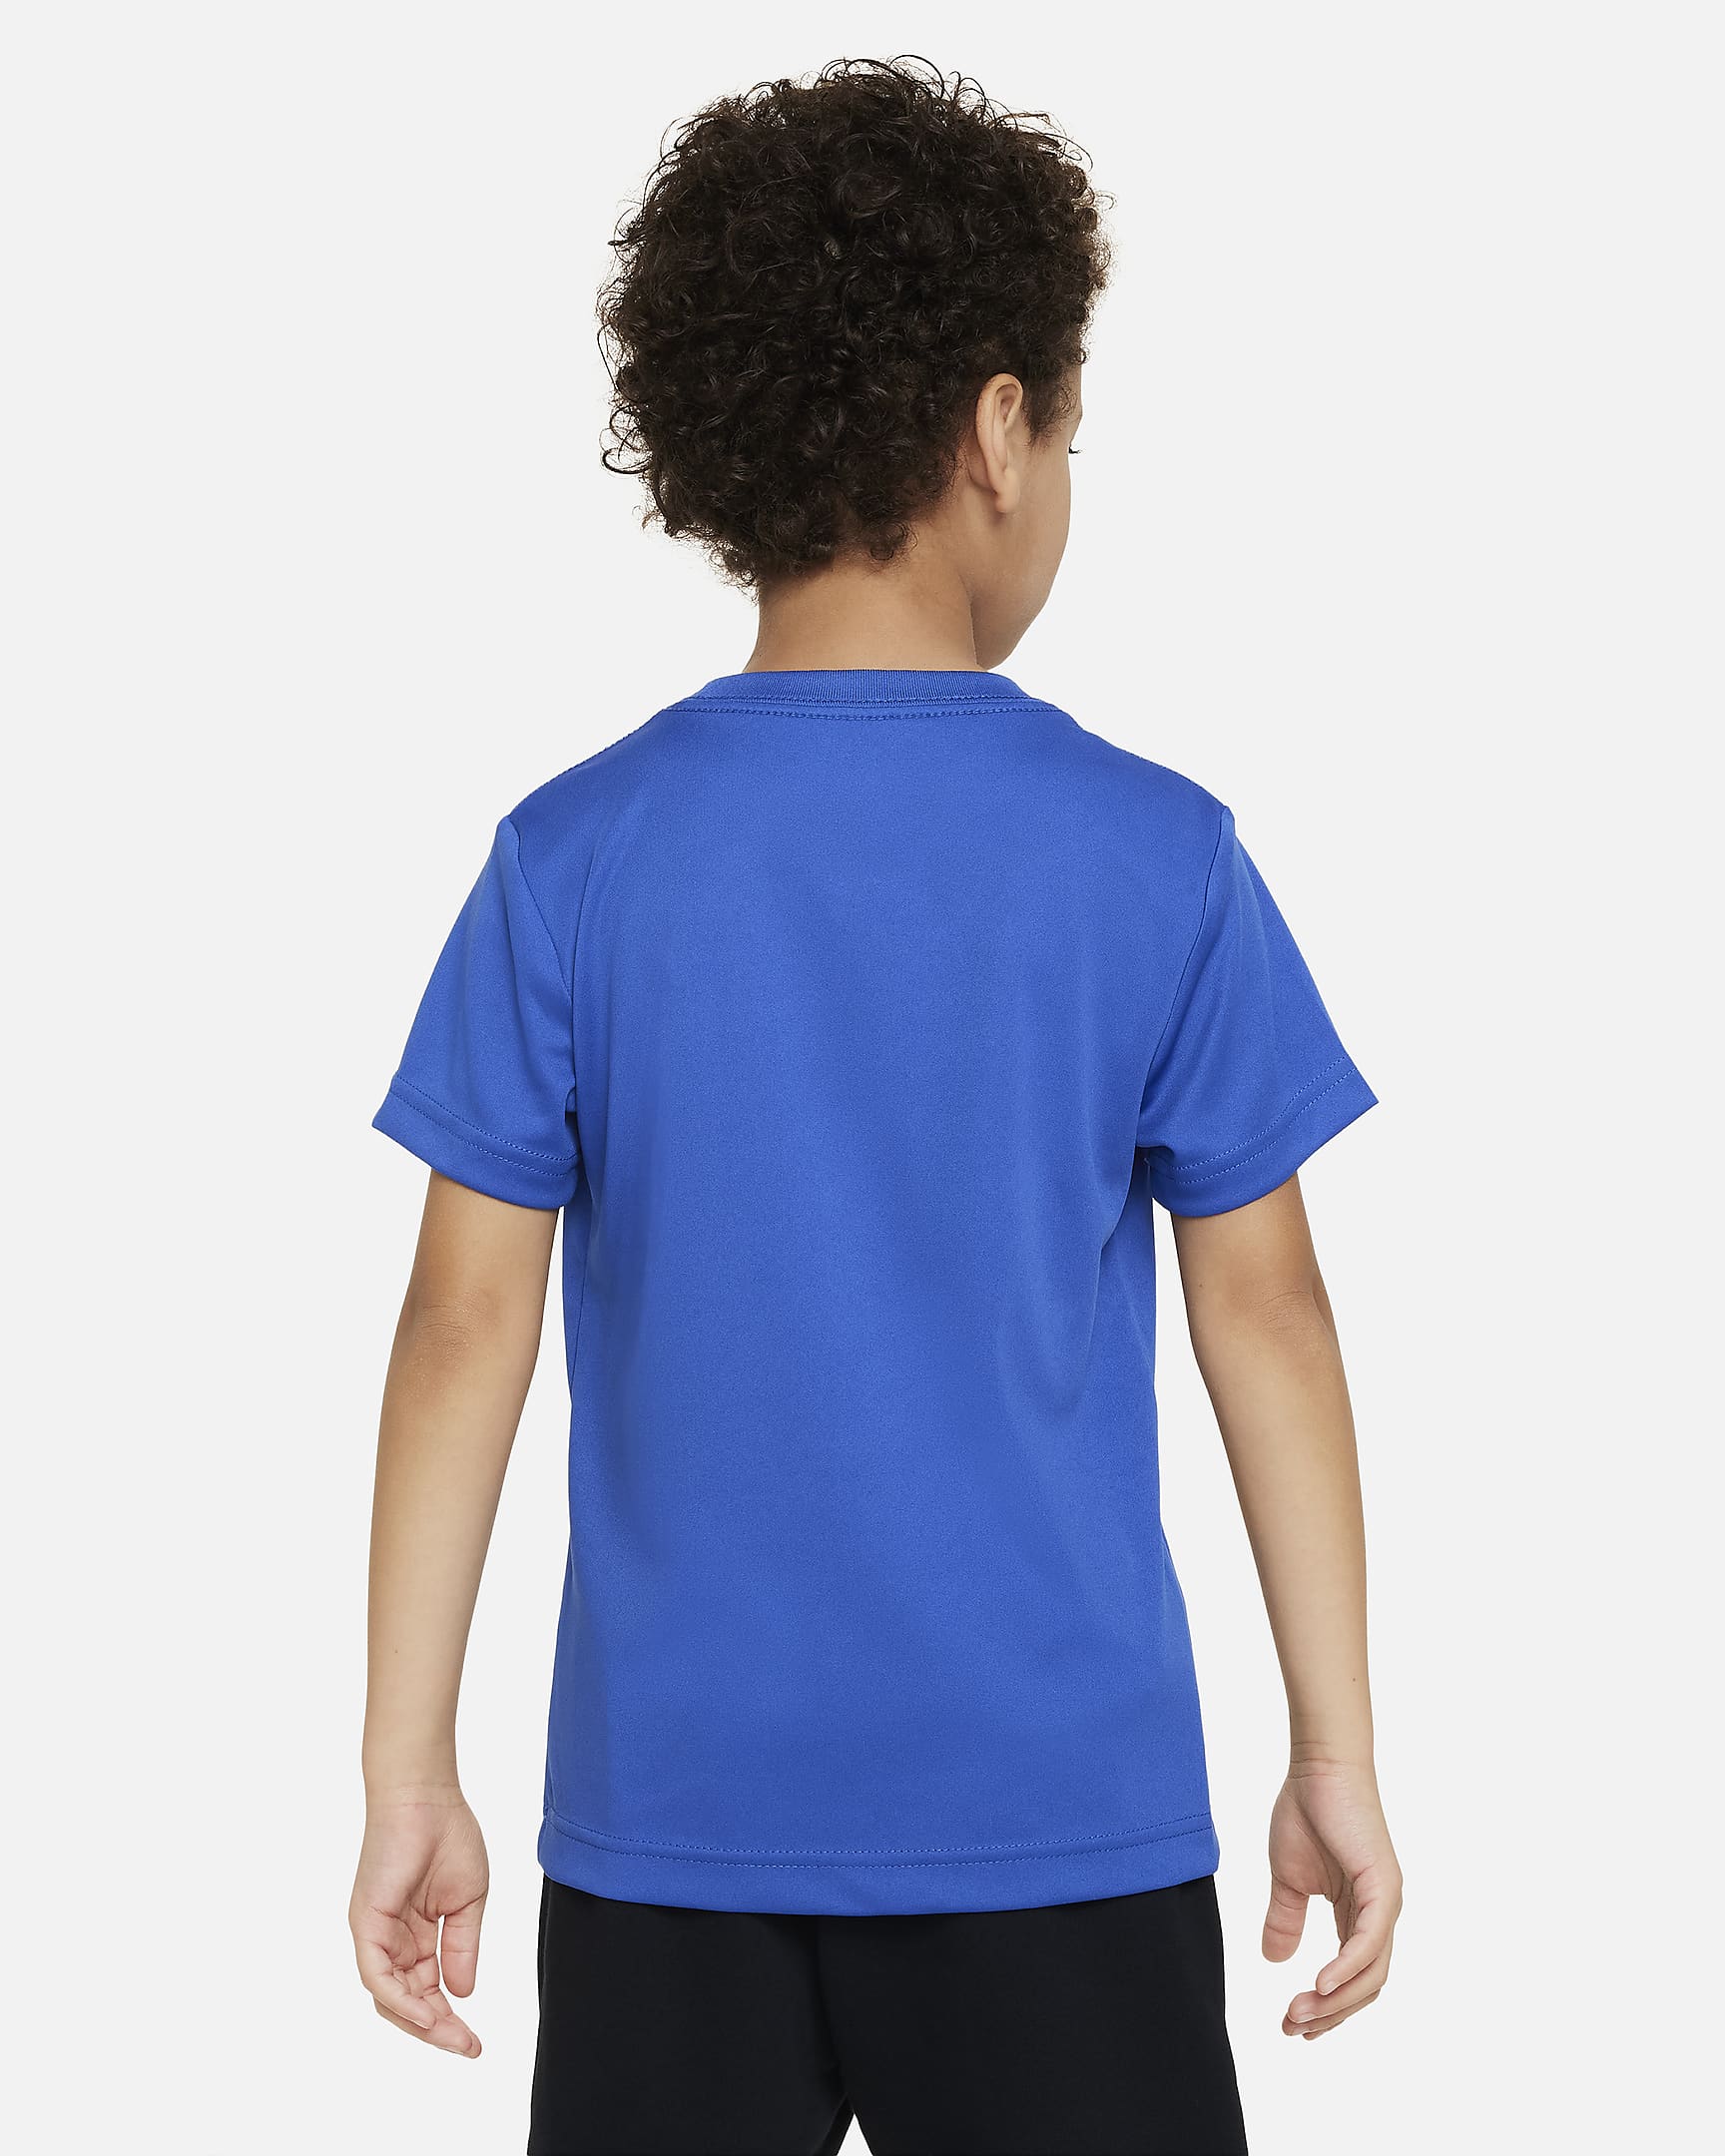 Nike Dri-FIT Little Kids' Graphic T-Shirt. Nike.com